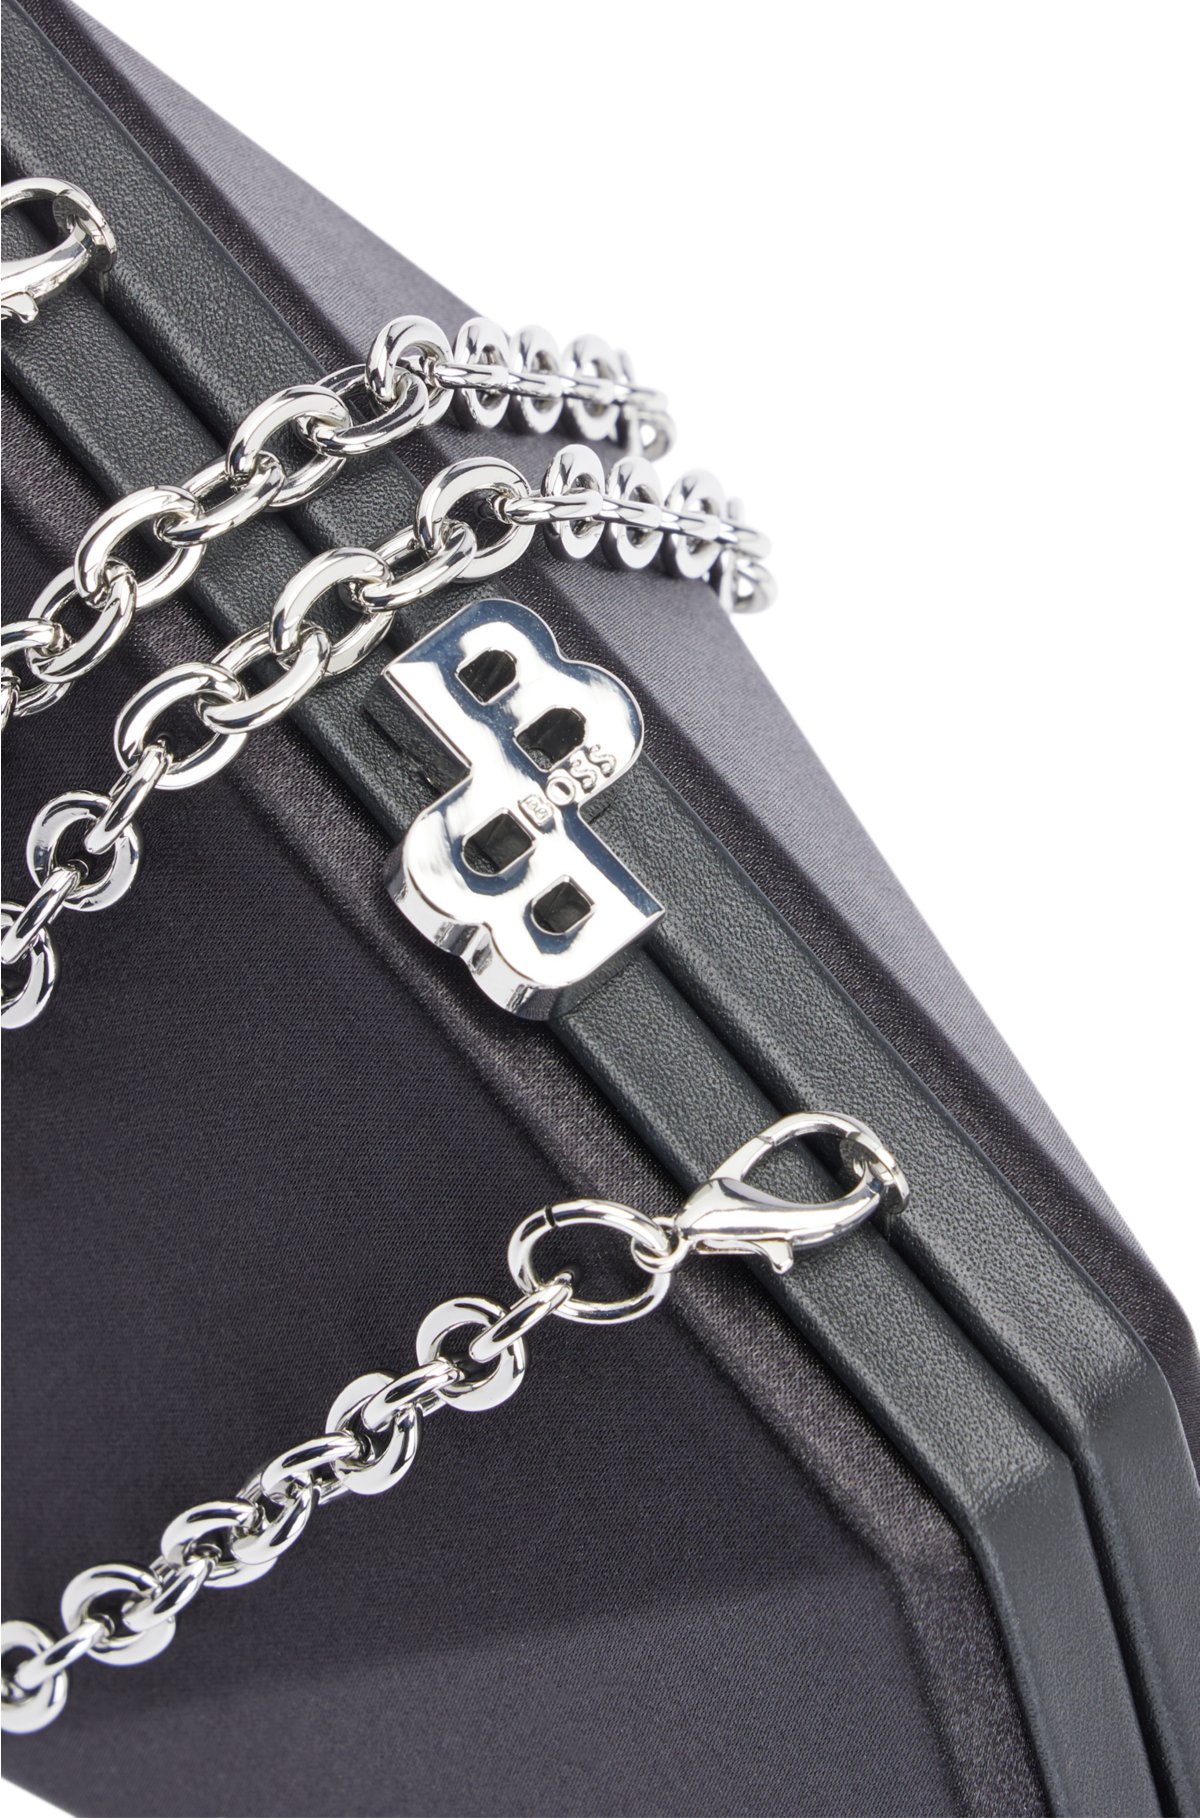 Black Satin Chain Strap Clutch Bag